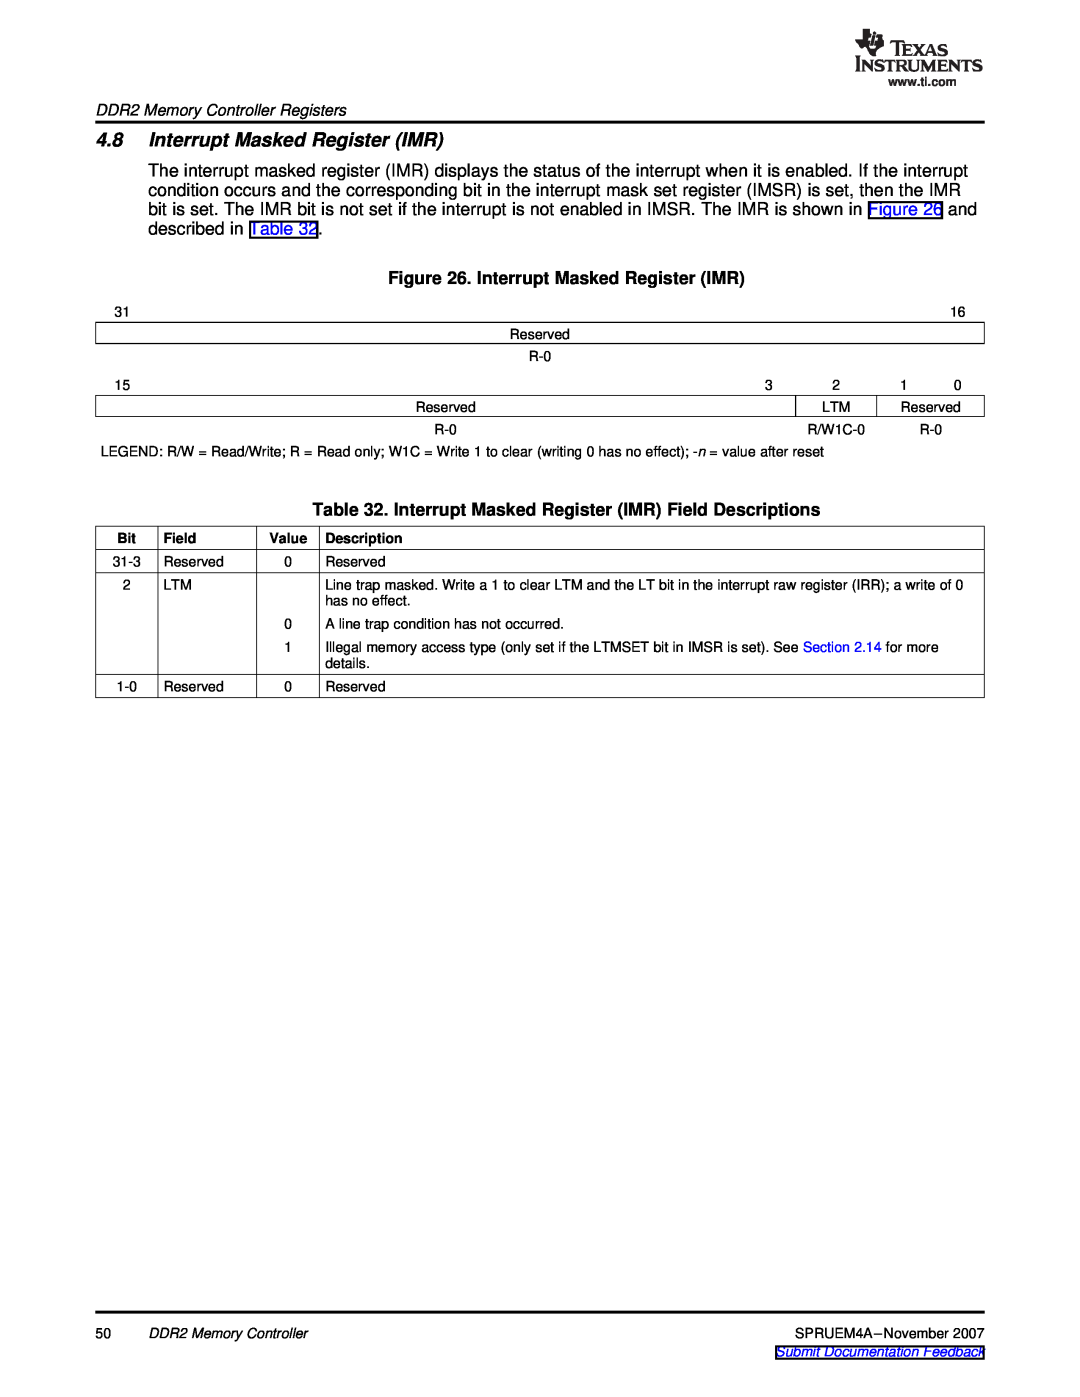 Texas Instruments TMS320C642x DSP manual Interrupt Masked Register IMR Field Descriptions 